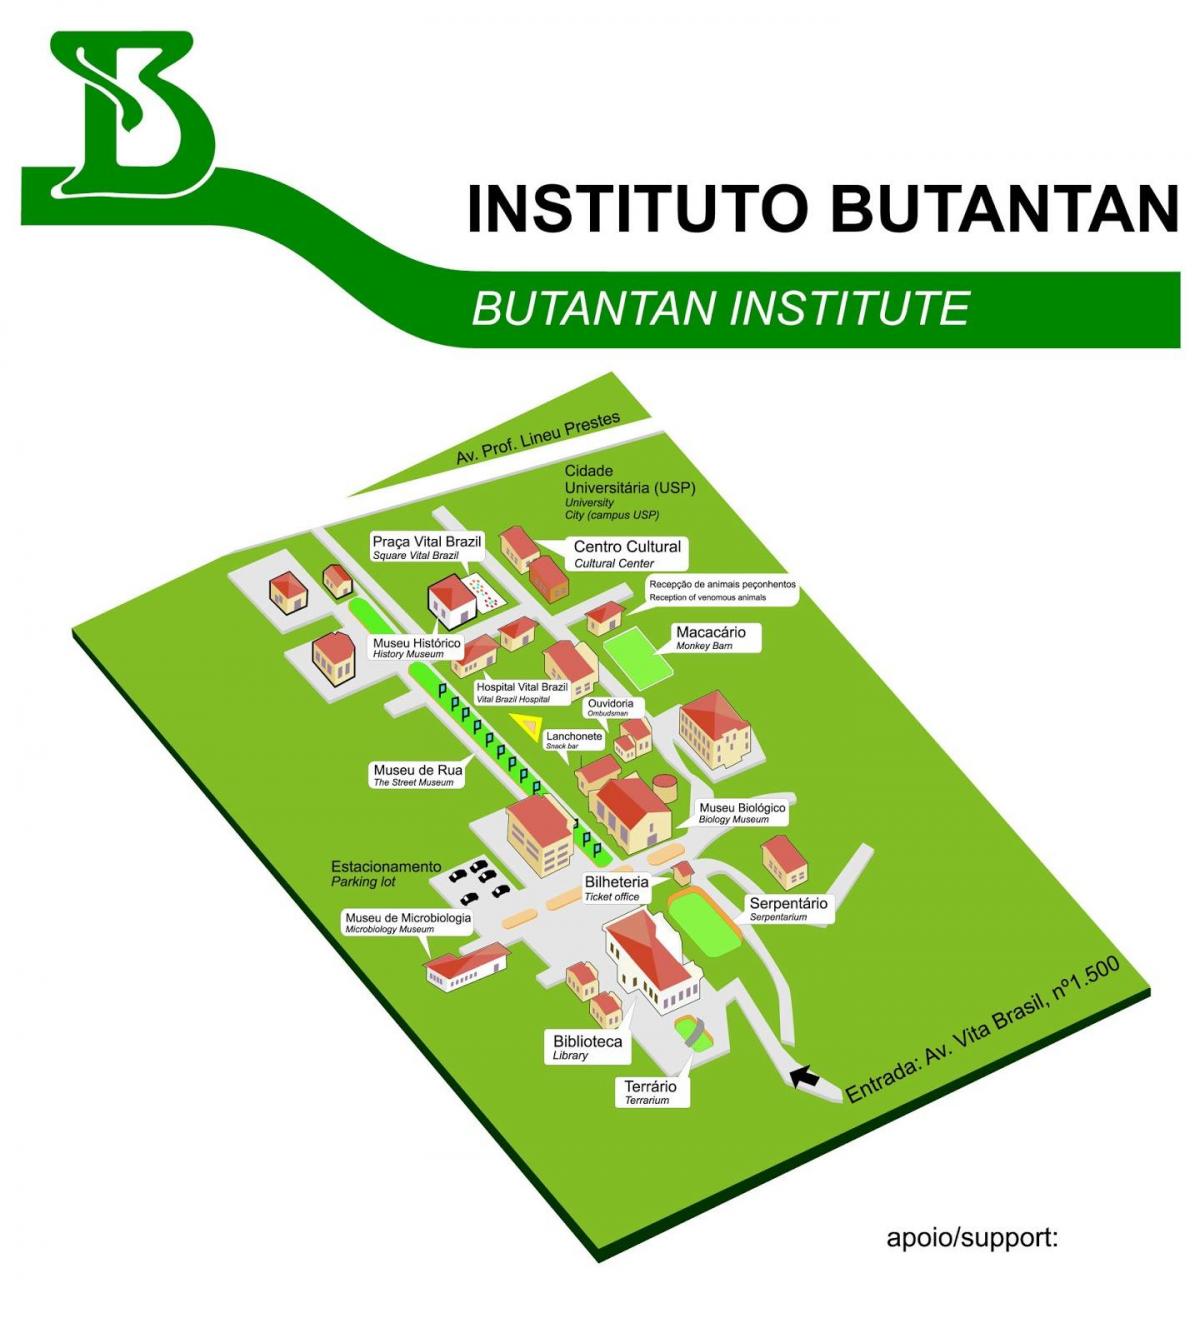 Kart institutunun Butantan